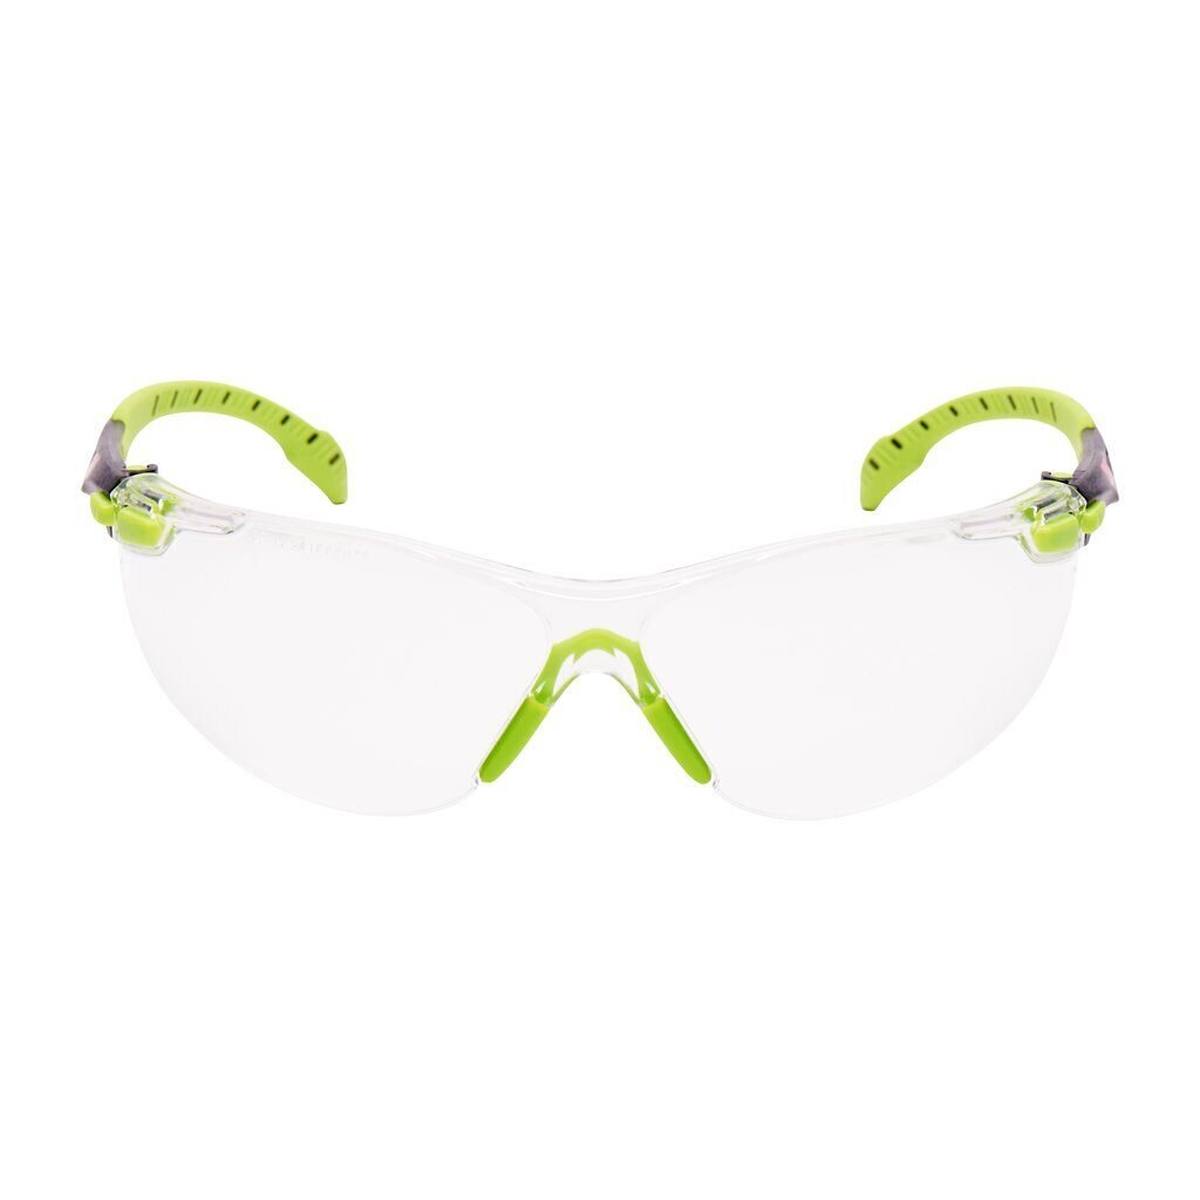 occhiali di sicurezza 3M Solus 1000, aste verdi/nere, rivestimento Scotchgard antiappannamento/antigraffio (K&amp;N), lente chiara, S1201SGAF-EU